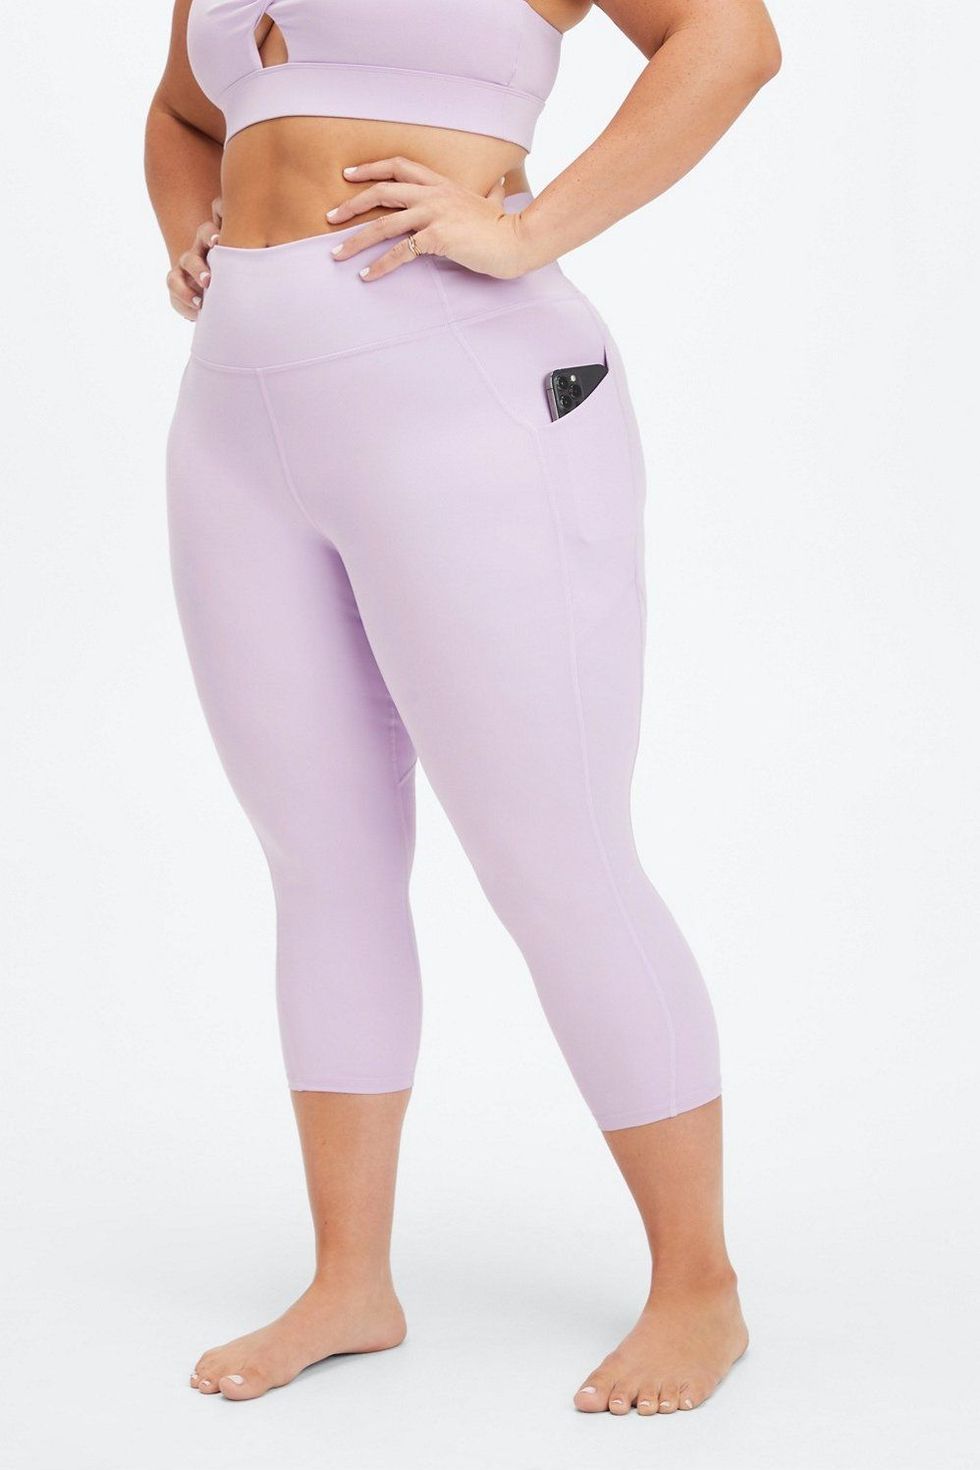 YUNAFFT Yoga Pants for Women Clearance Plus Size Women's Yoga